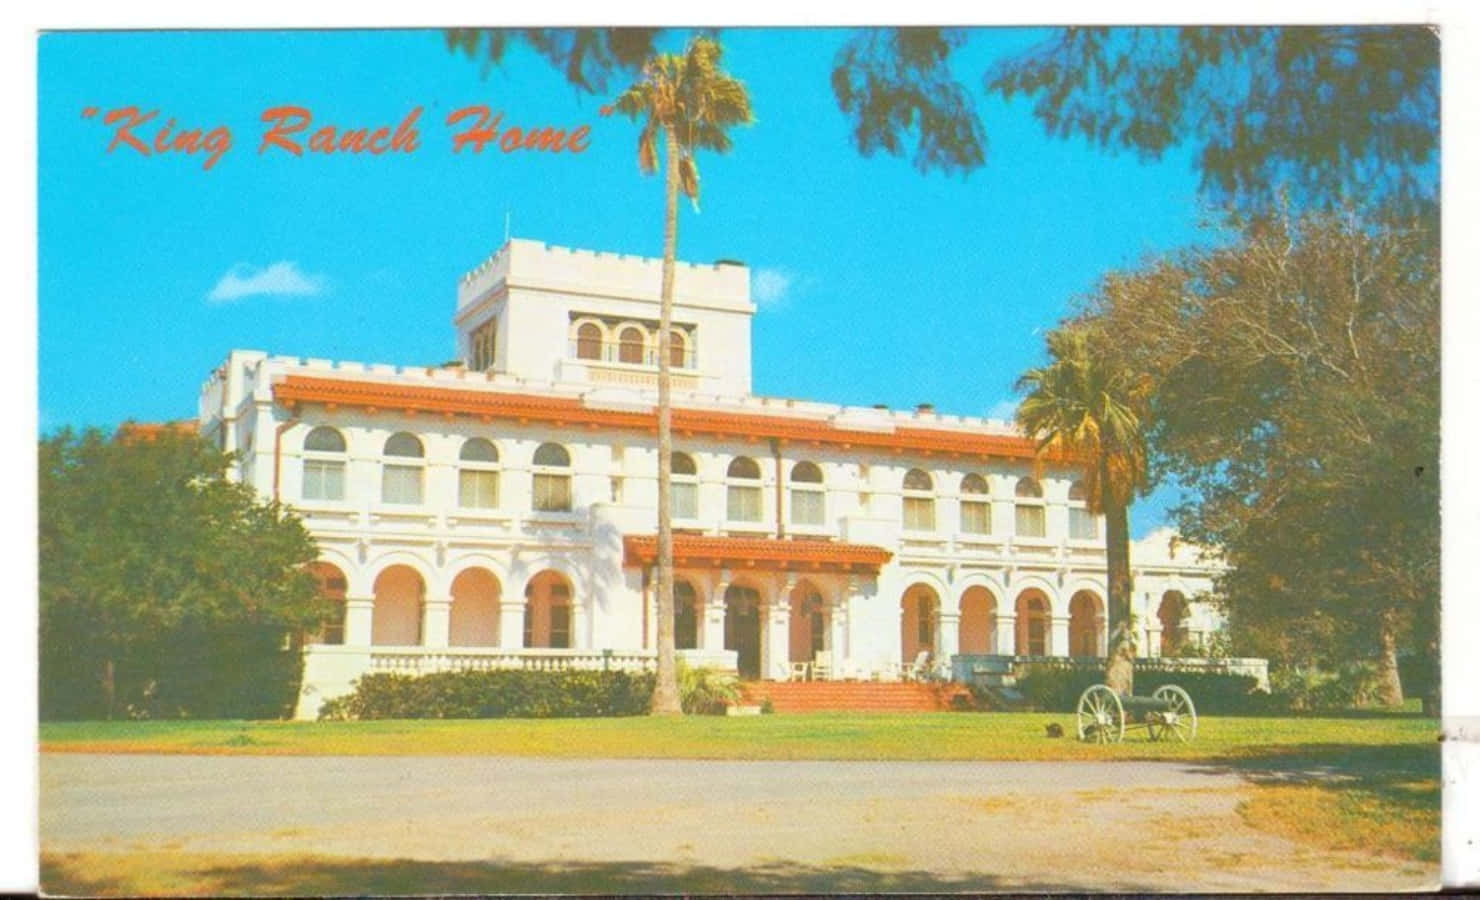 King Beach Hotel Postcard